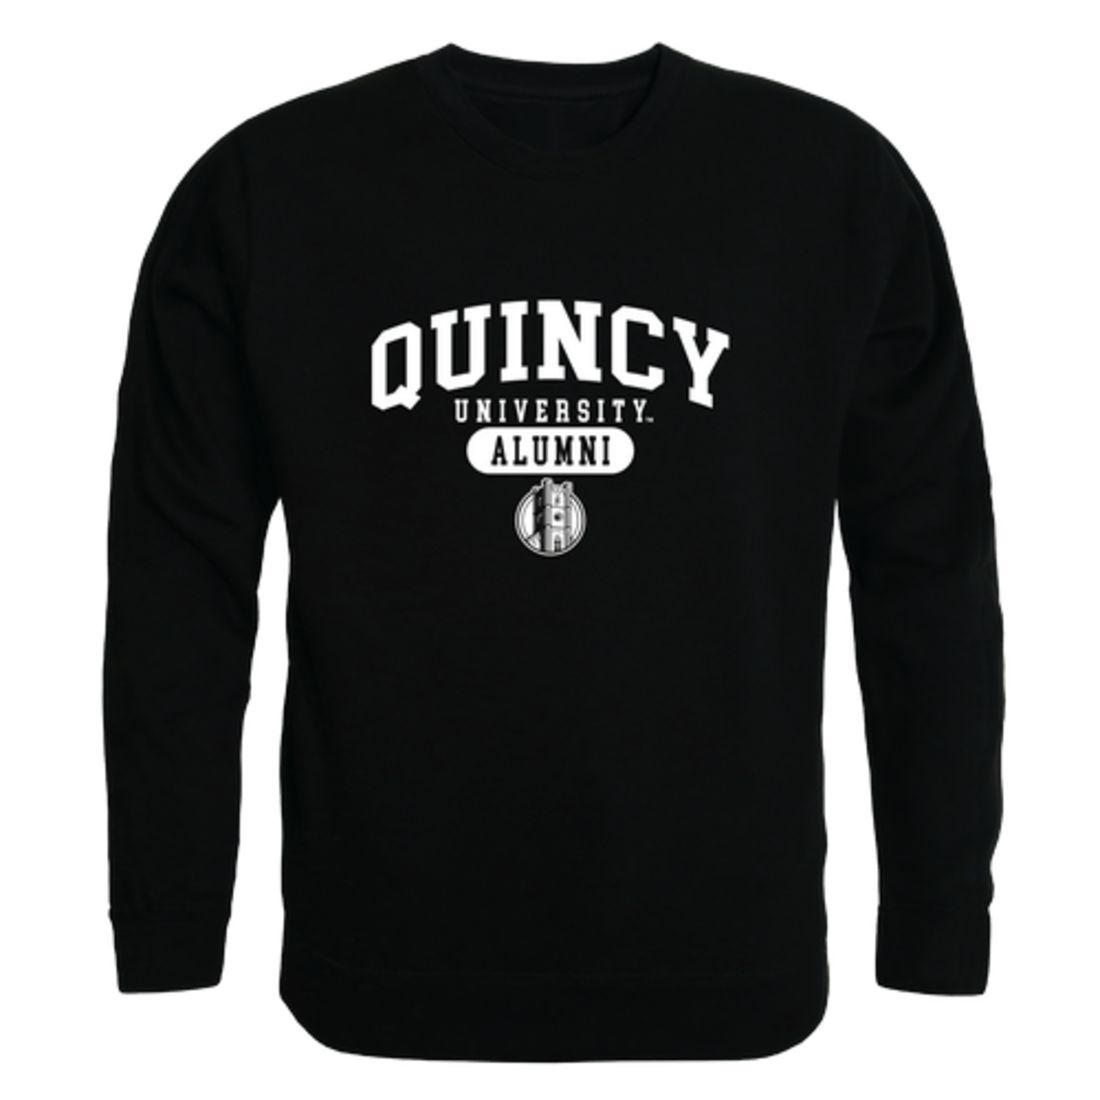 Quincy University Hawks Alumni Crewneck Sweatshirt